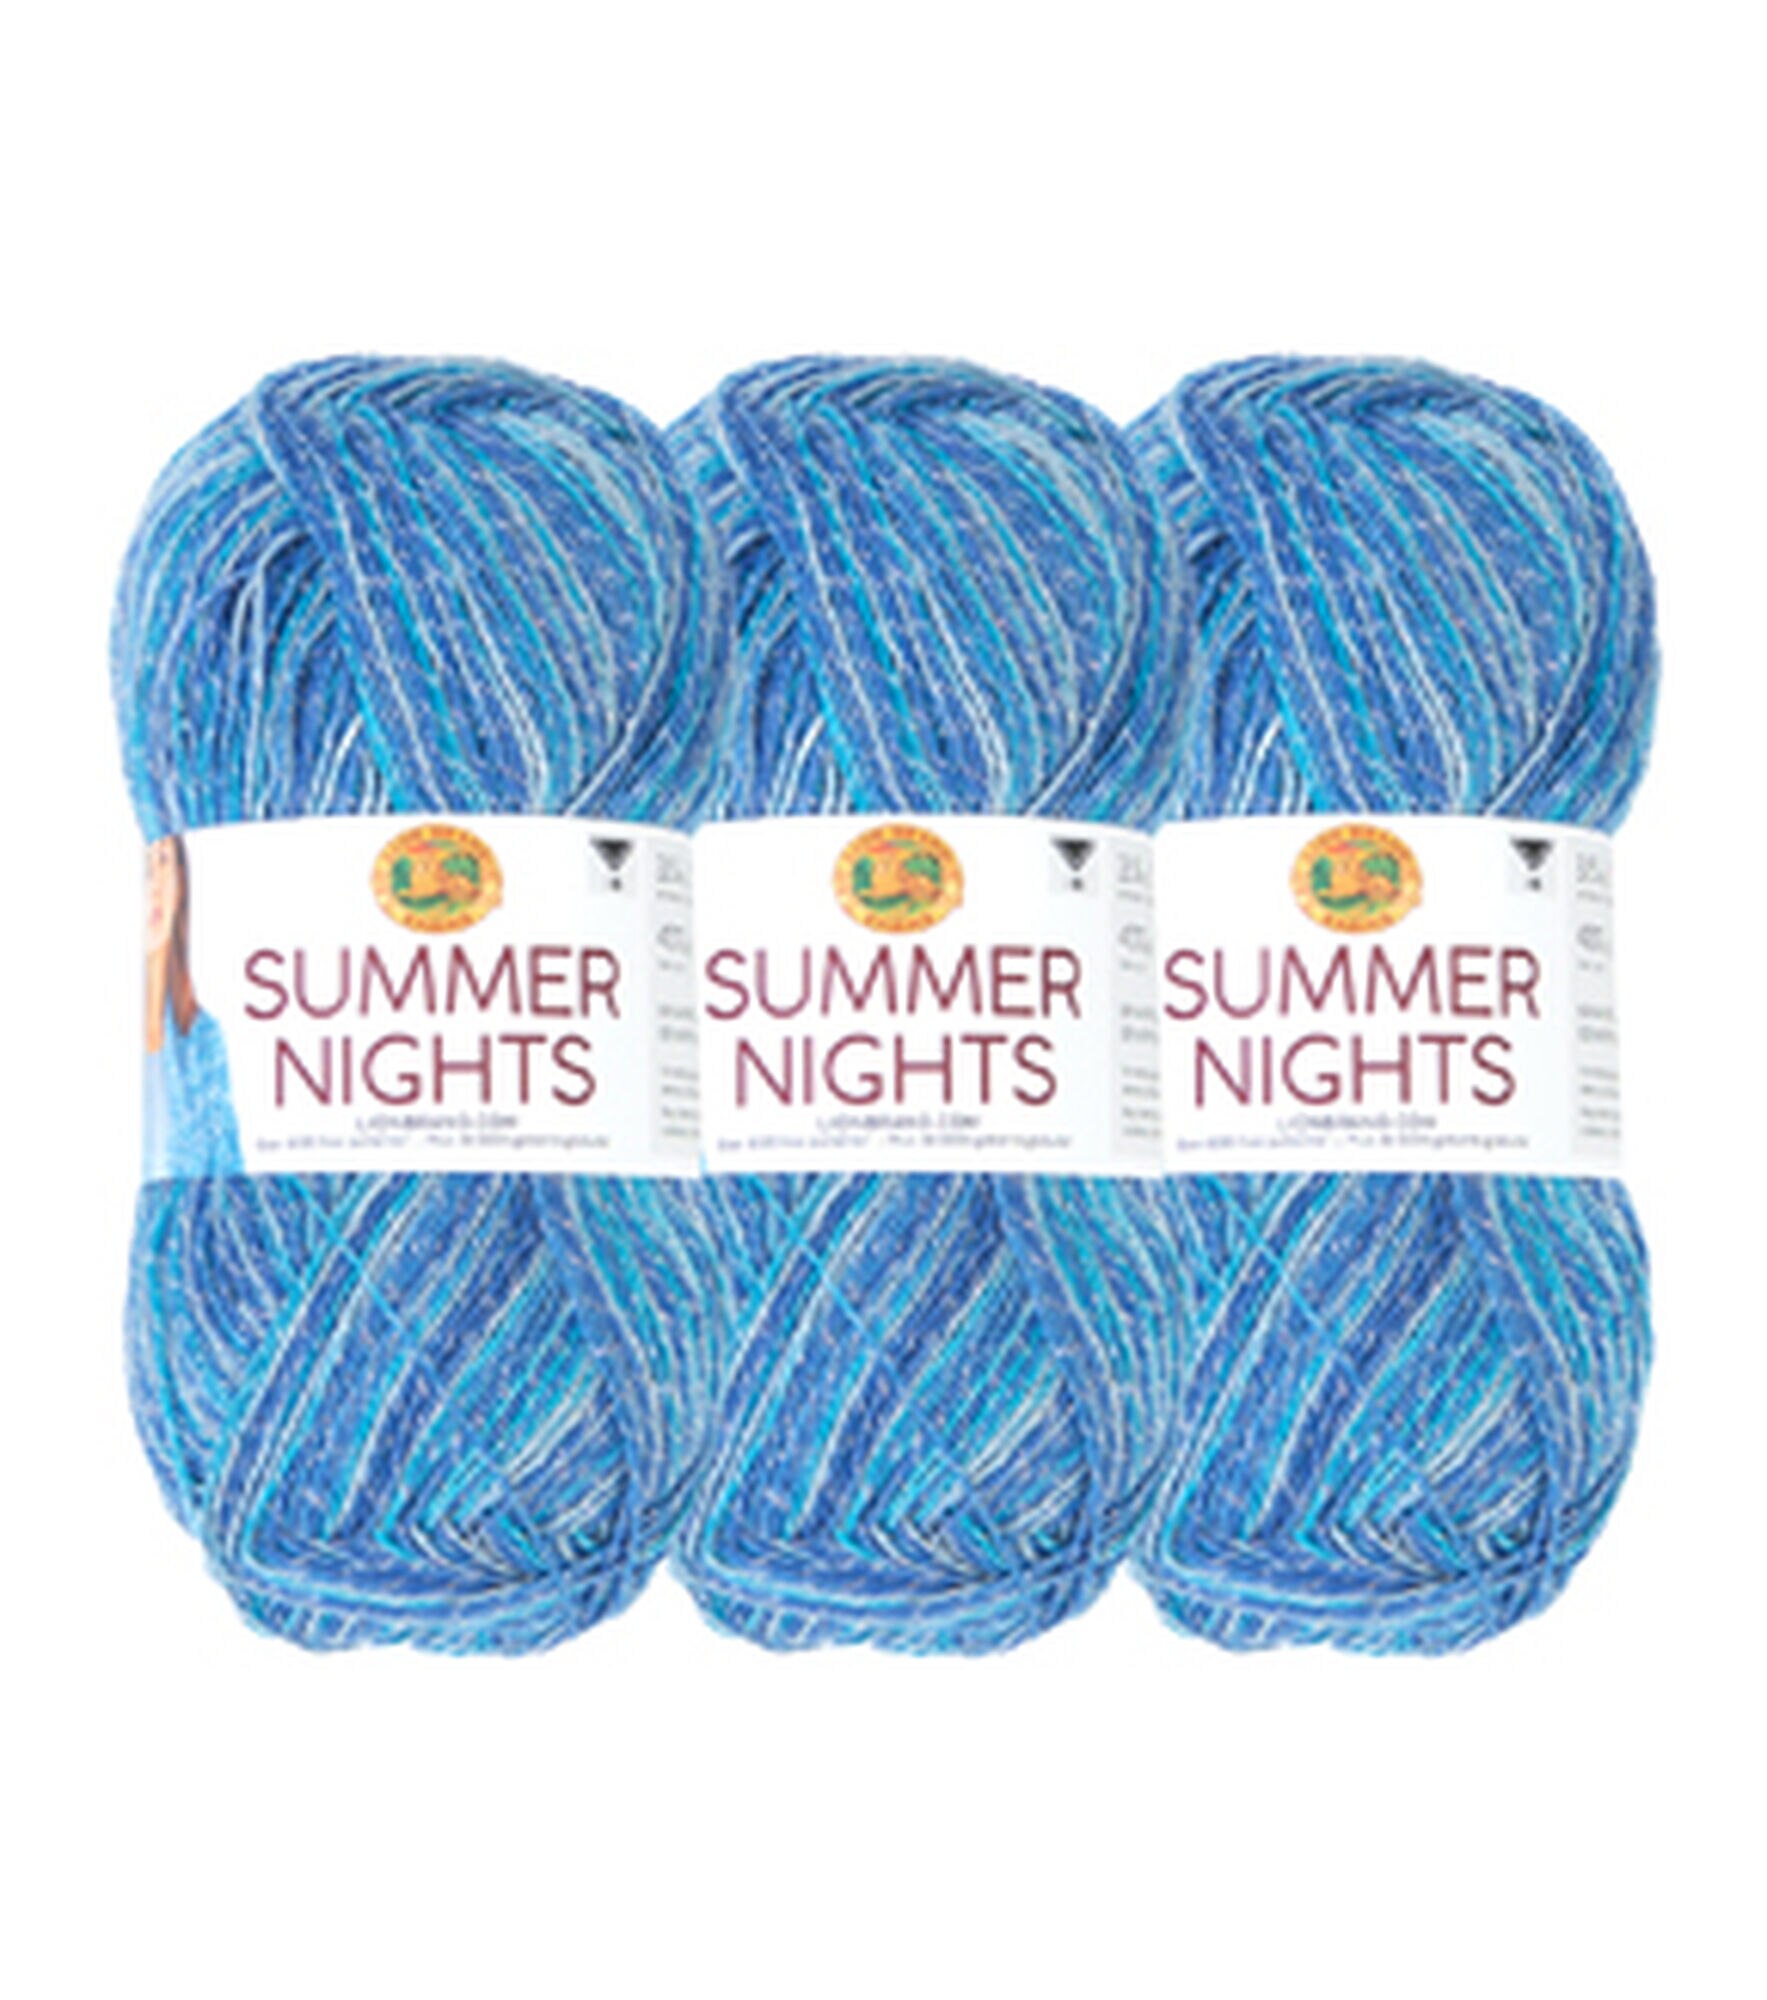 Multipack of 10 - Lion Brand Wool-Ease Yarn -Wheat